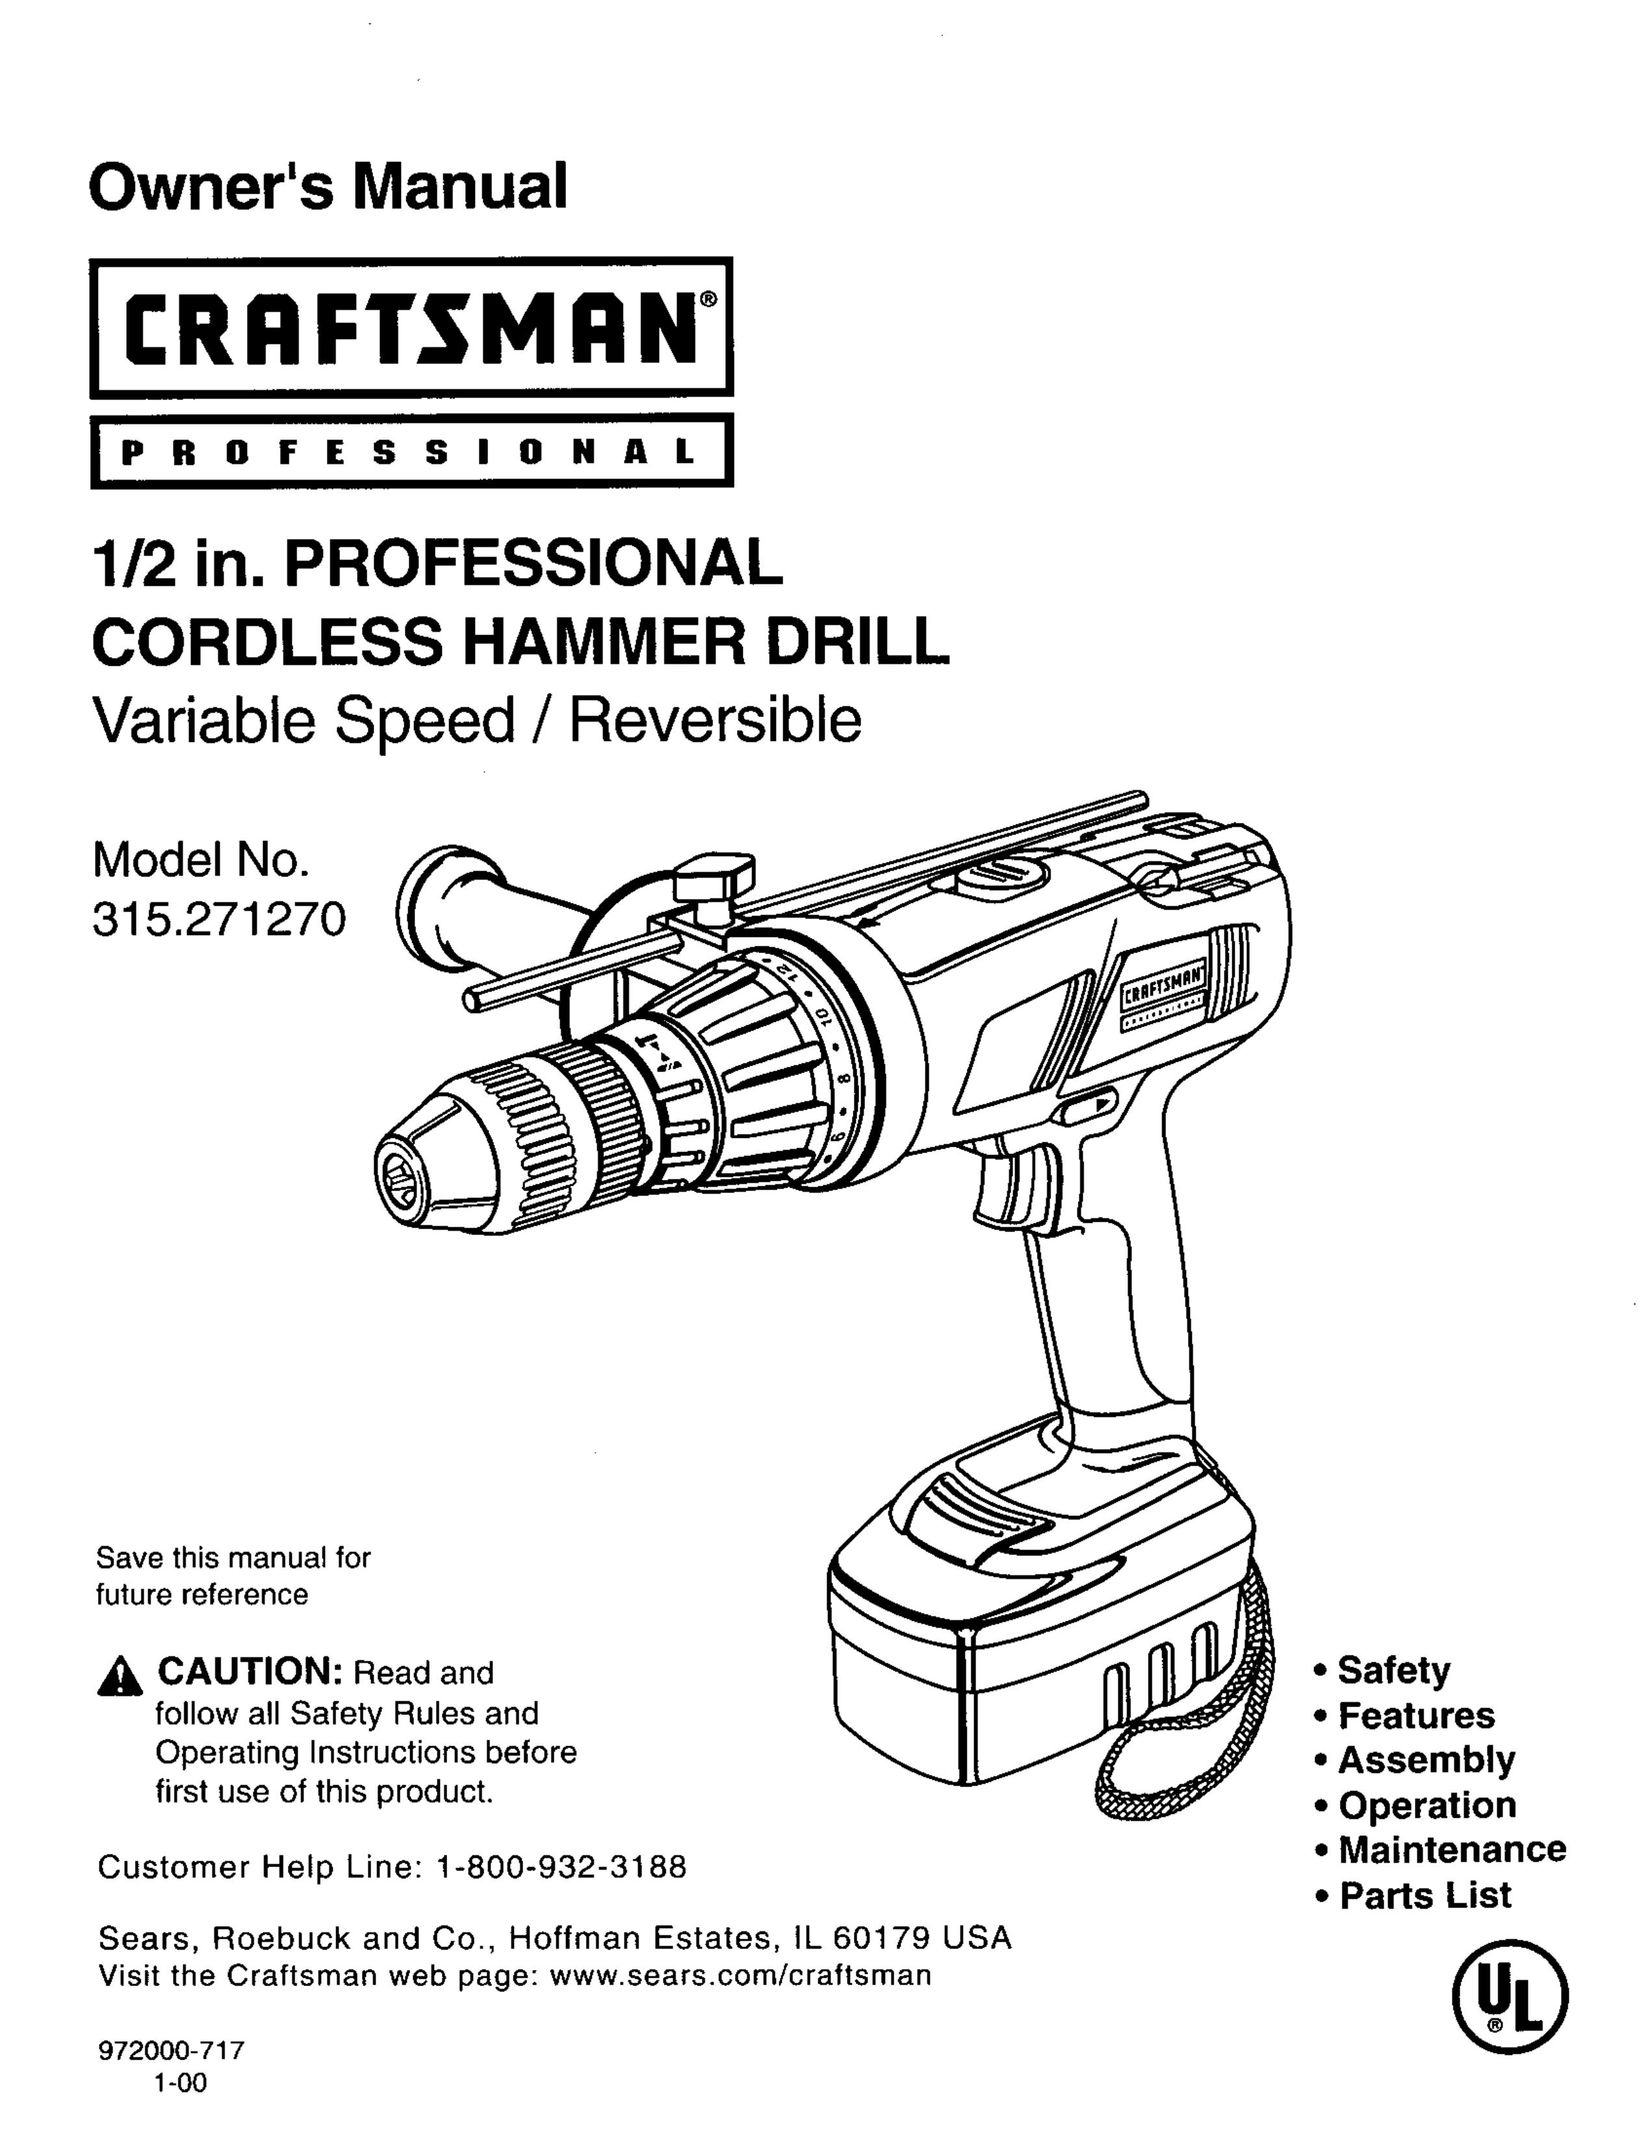 Craftsman 315.27127 Cordless Drill User Manual